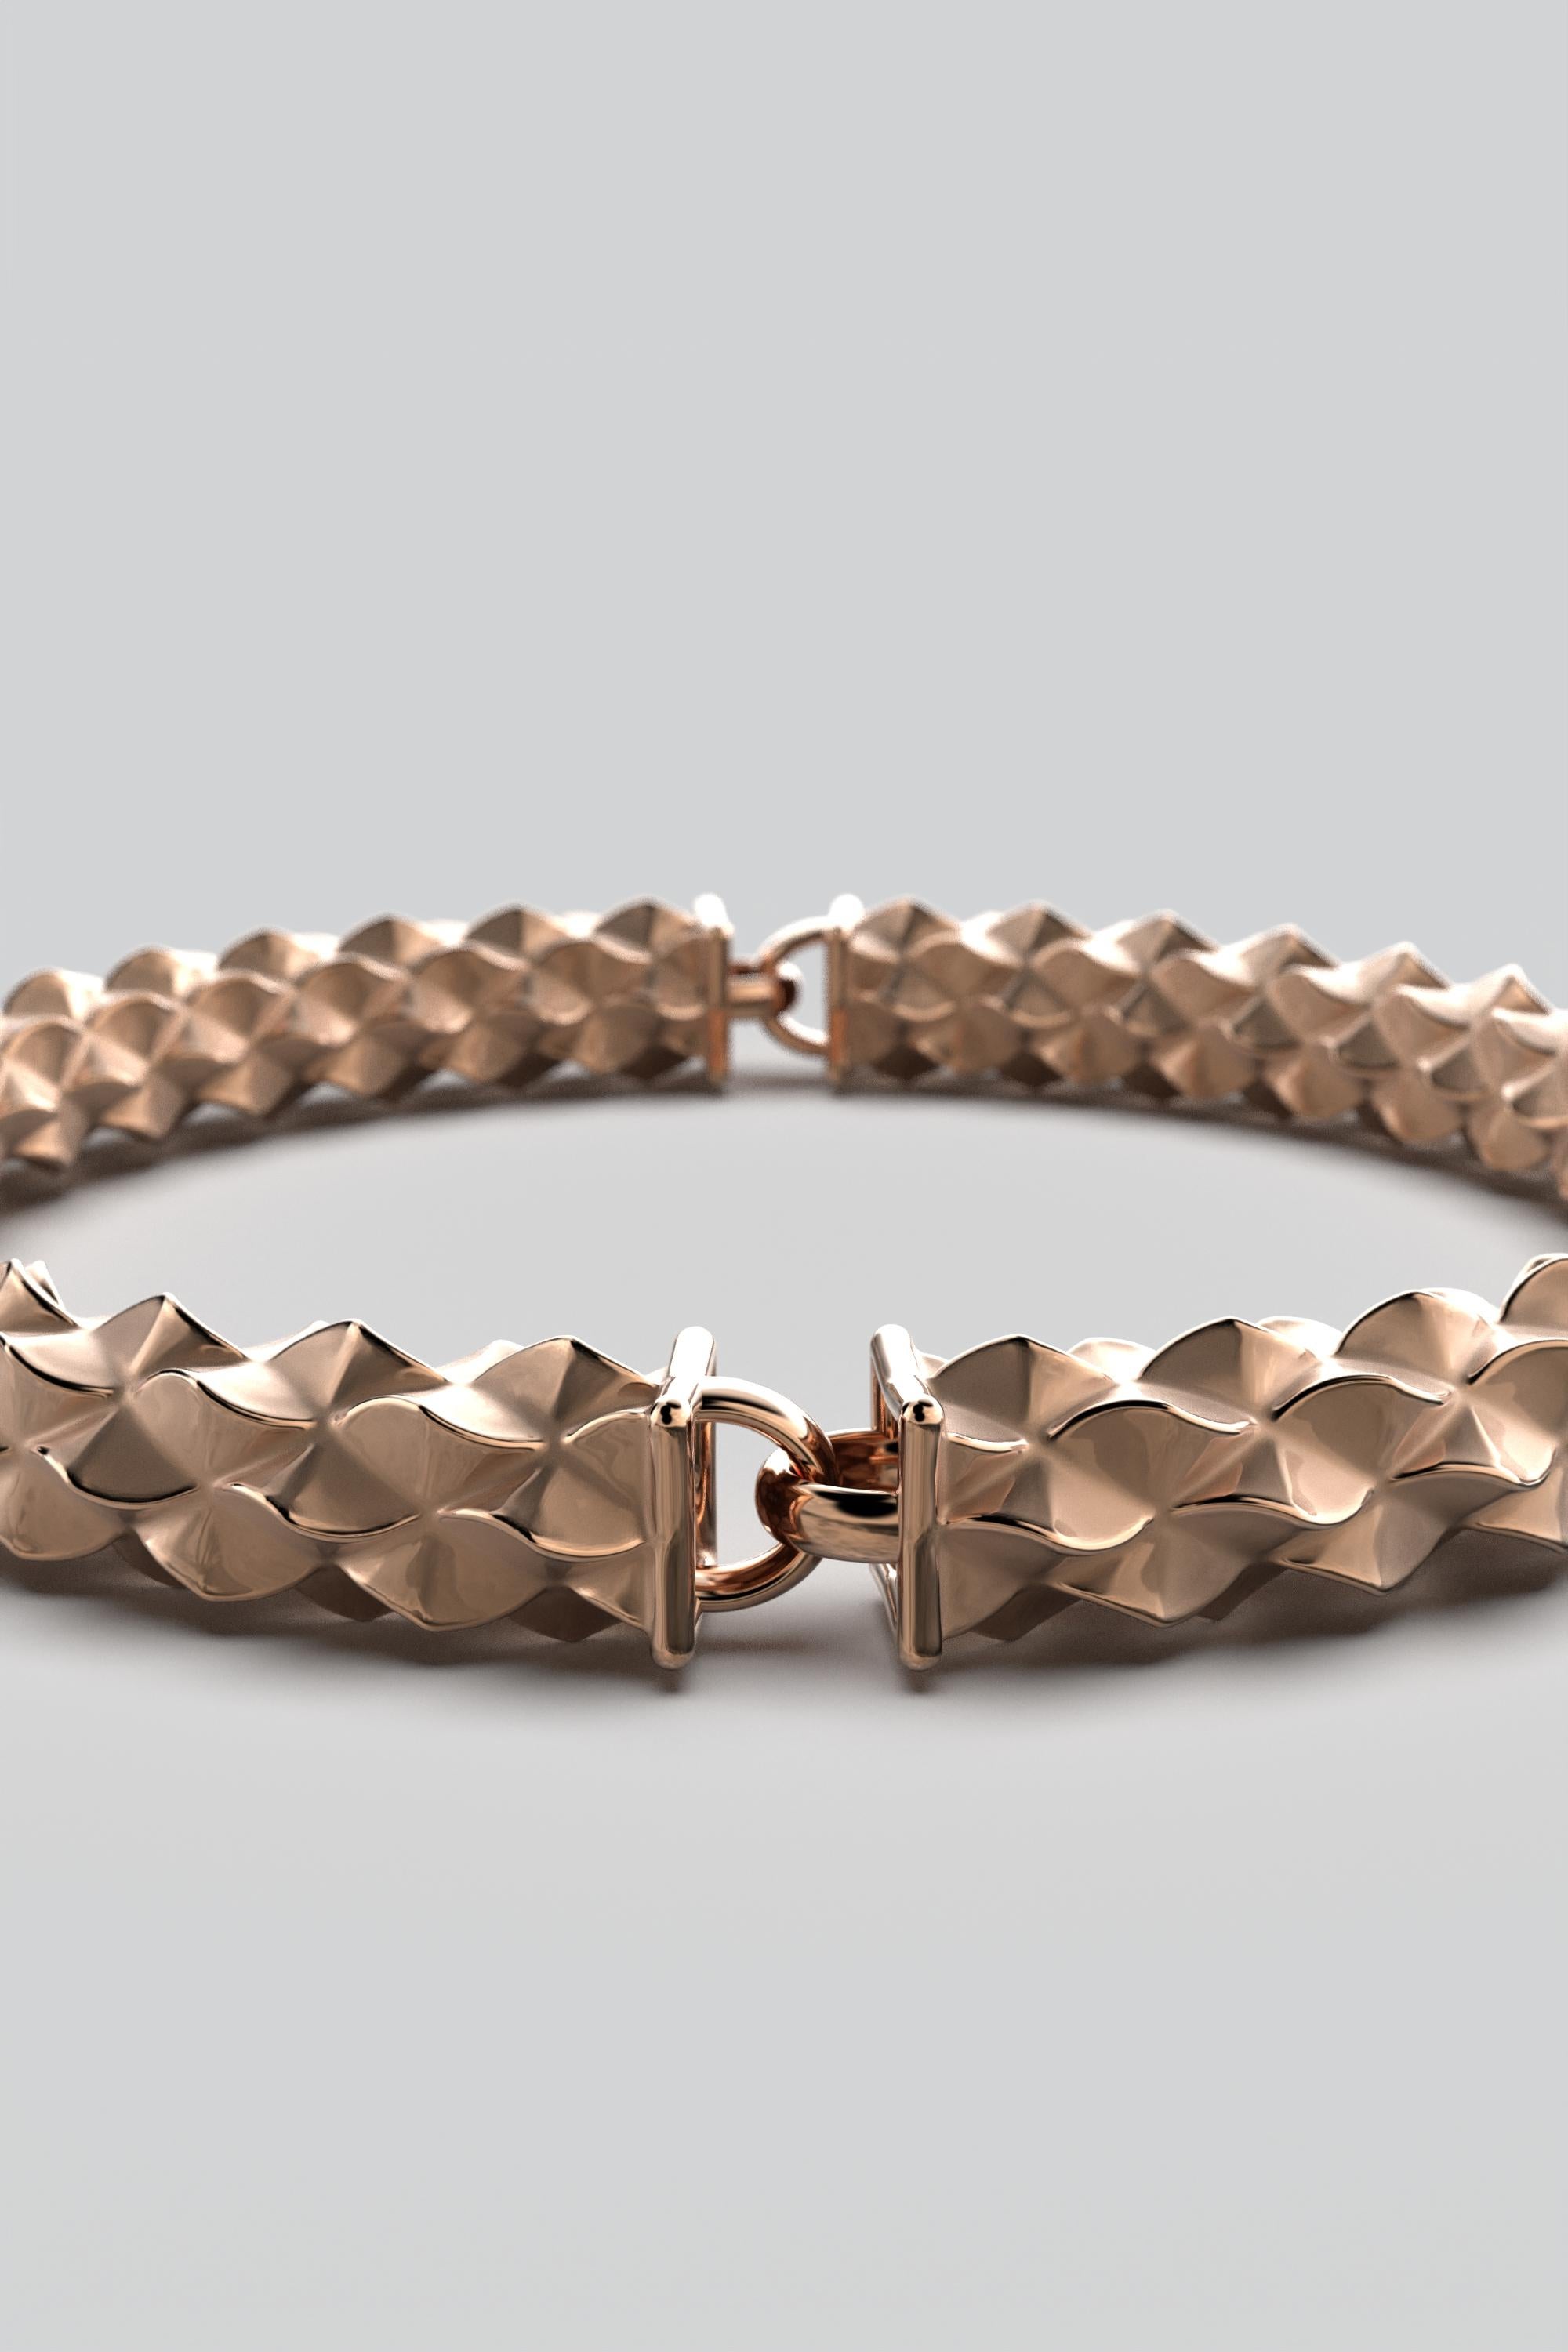 14k Italian Gold Link Bracelet: Custom Semi-Rigid Design by Oltremare Gioielli For Sale 5